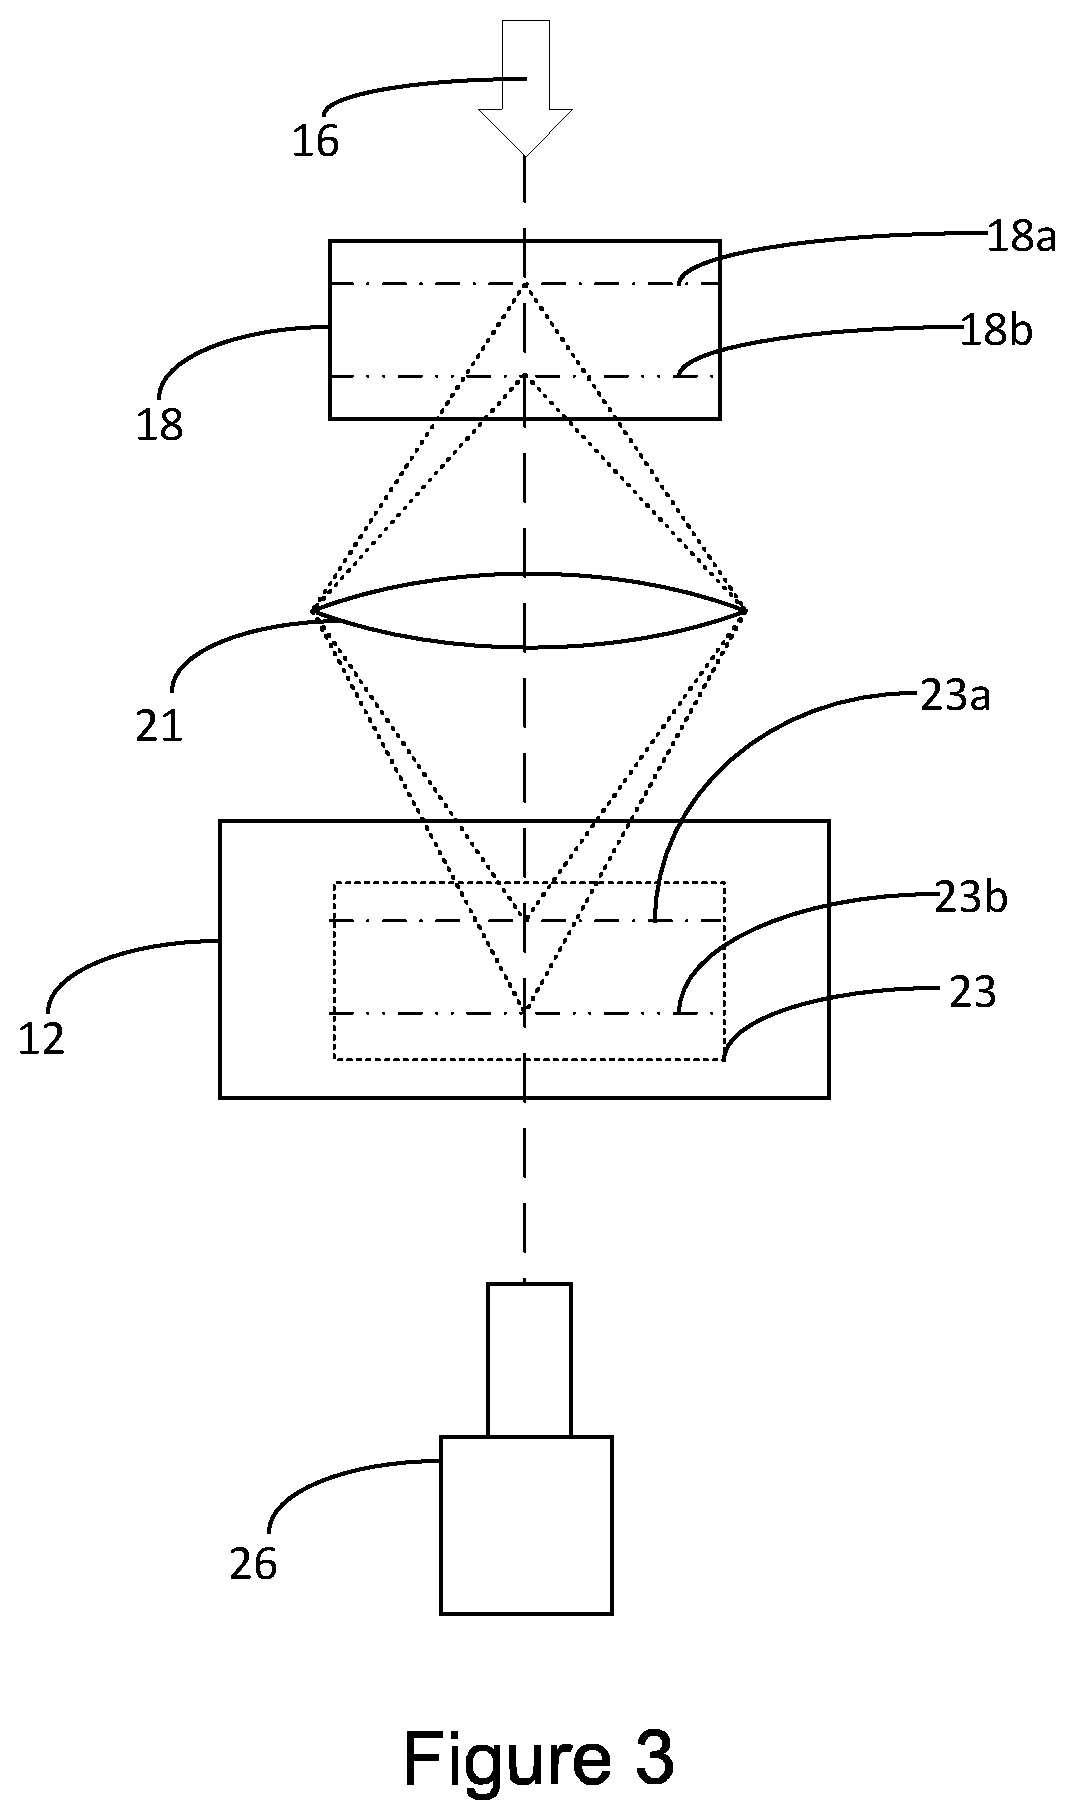 Method and Apparatus for Terahertz or Microwave Imaging